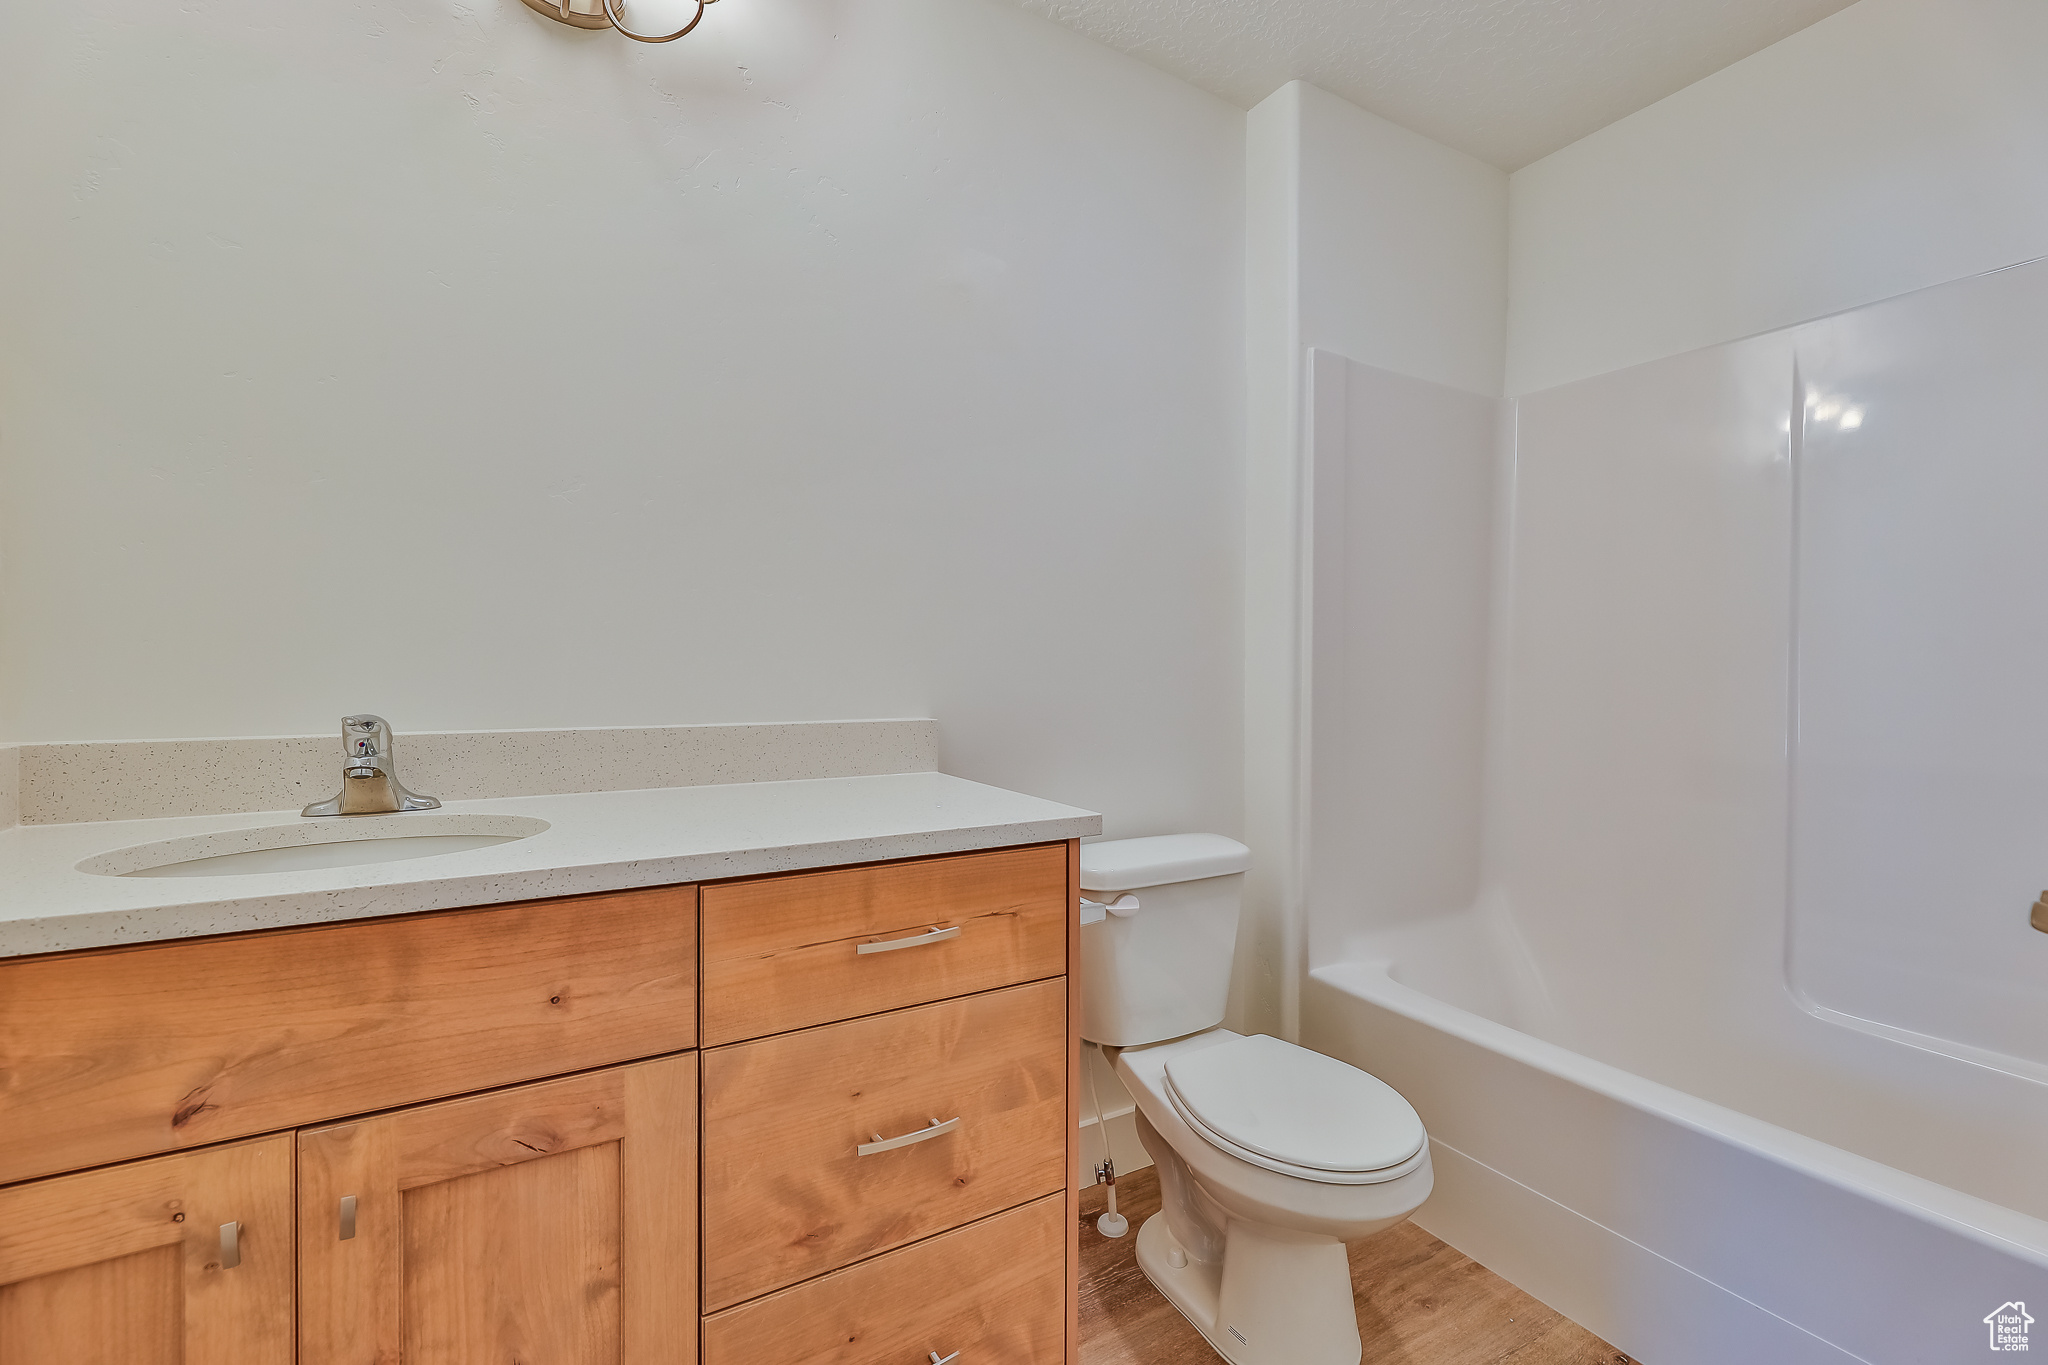 Full bathroom with vanity, toilet, hardwood / wood-style floors, and tub / shower combination